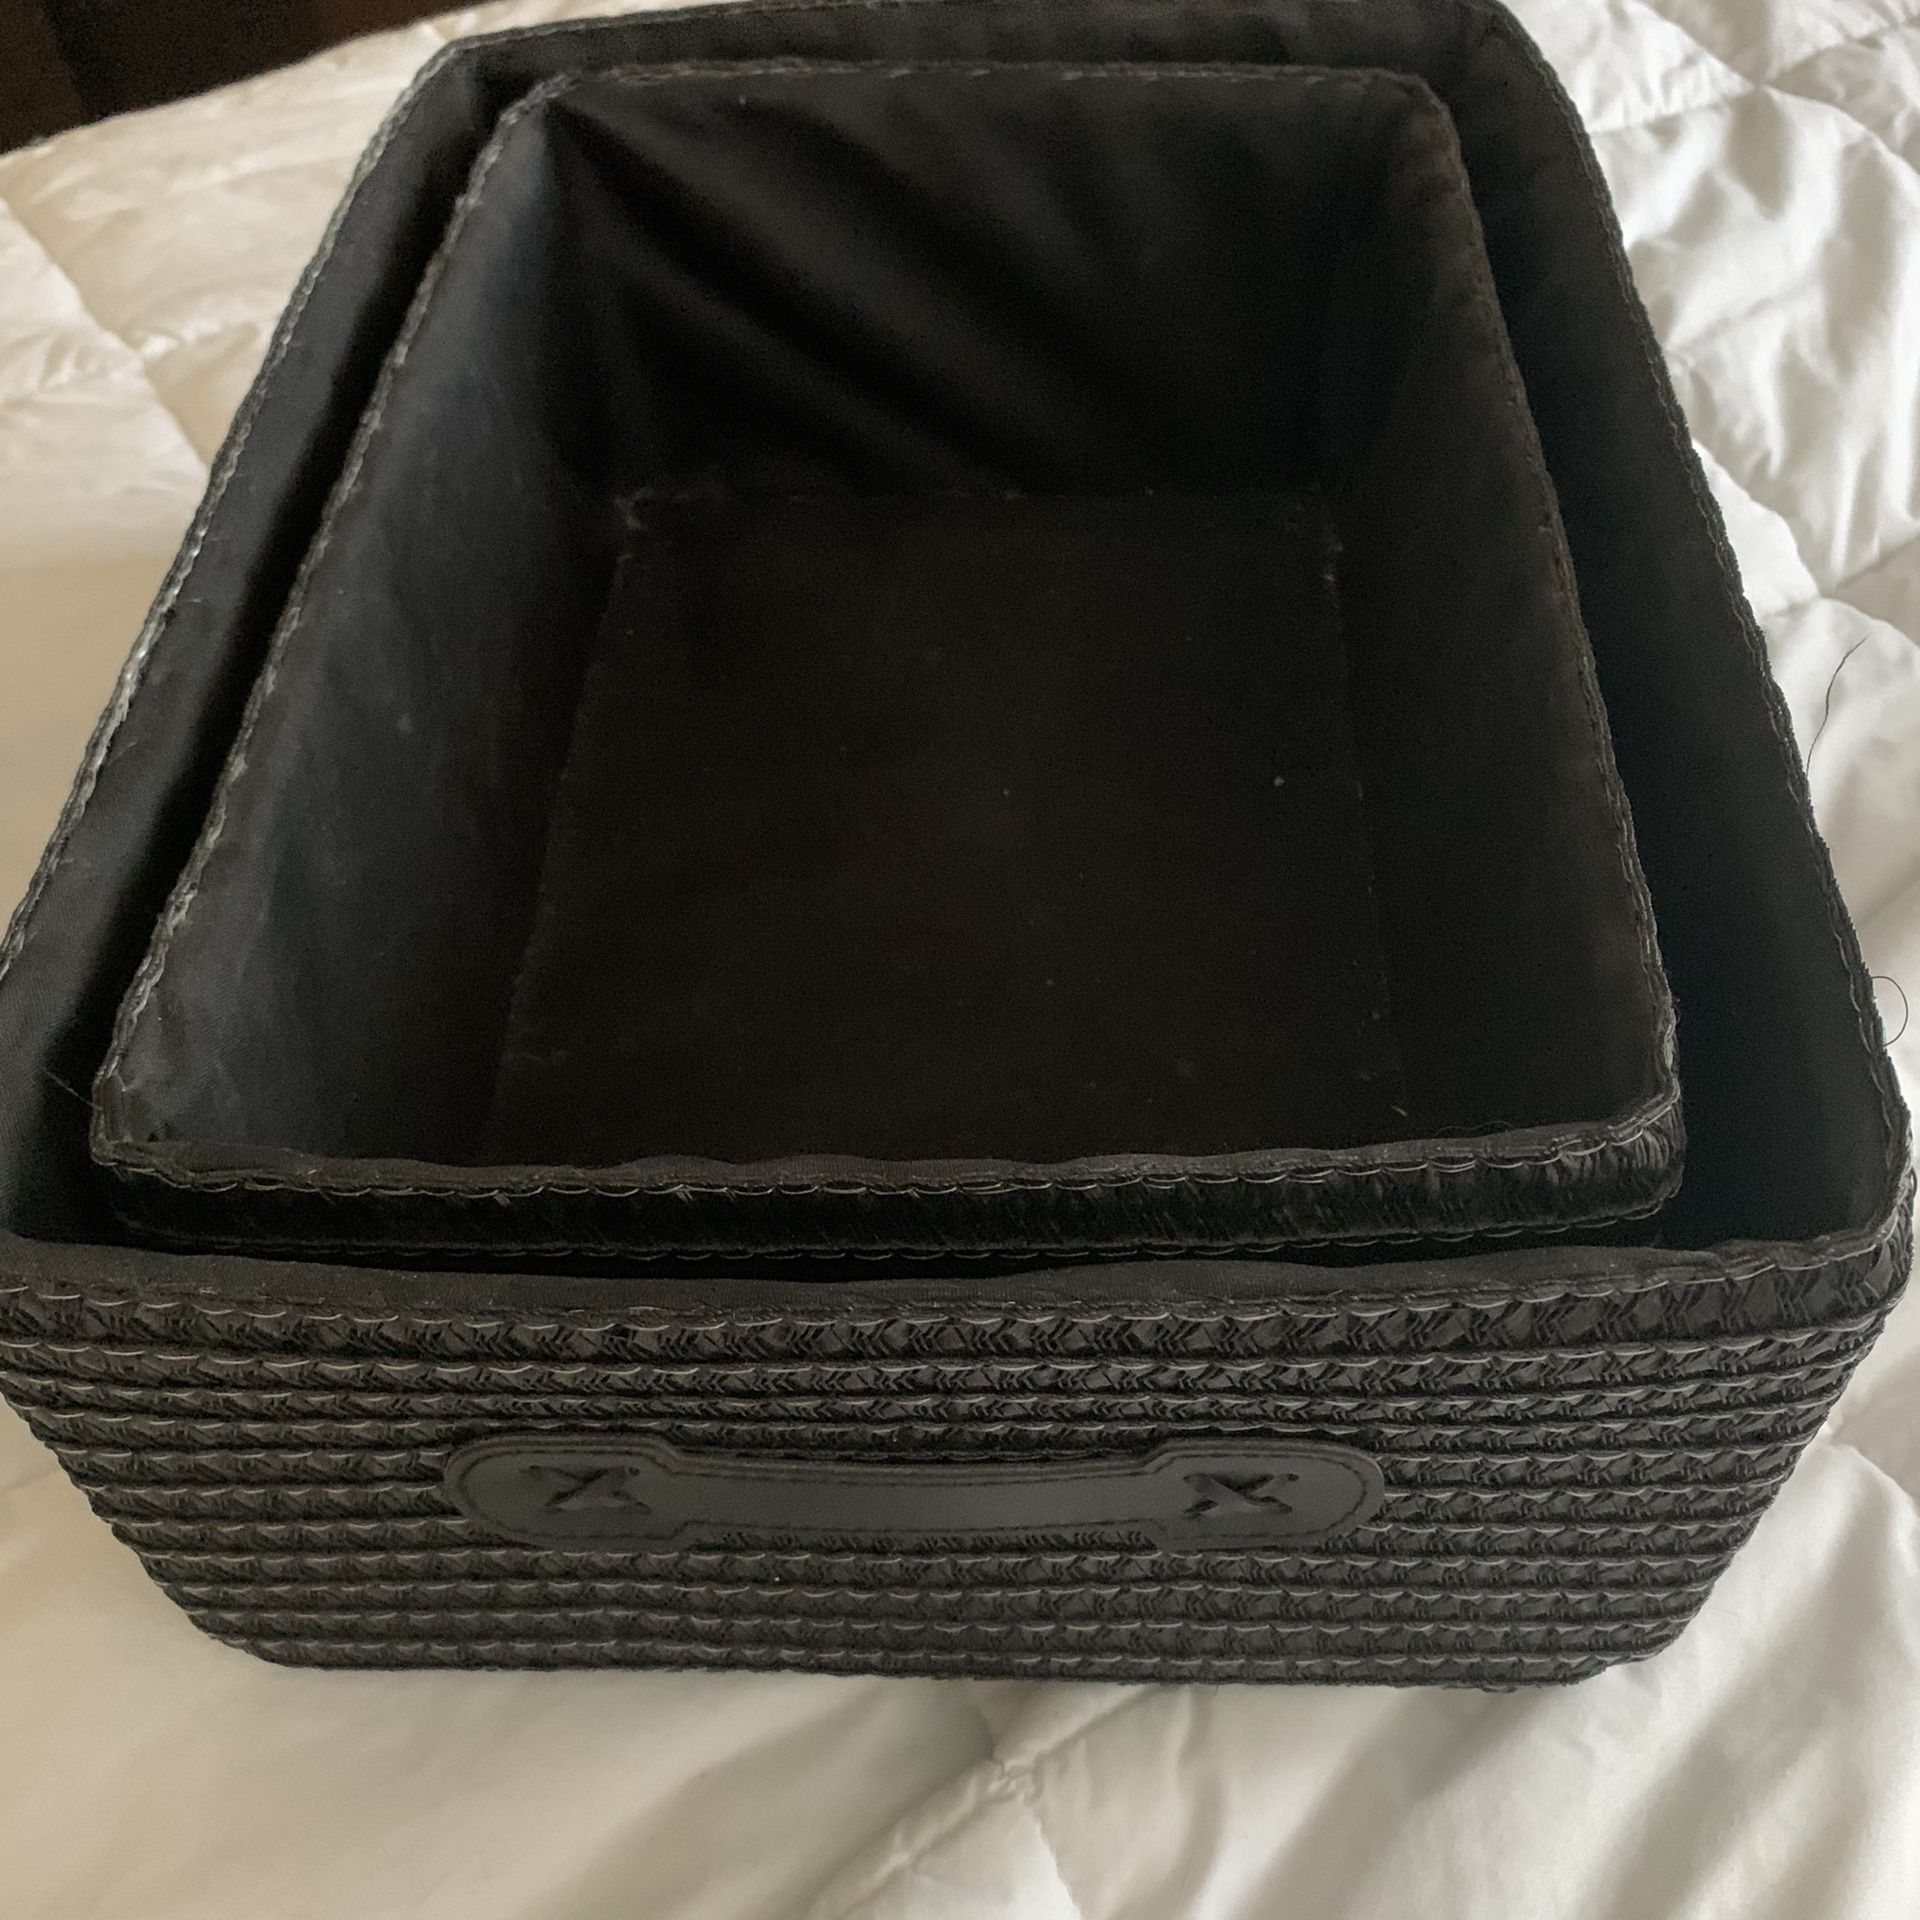 Set of 2 black storage baskets